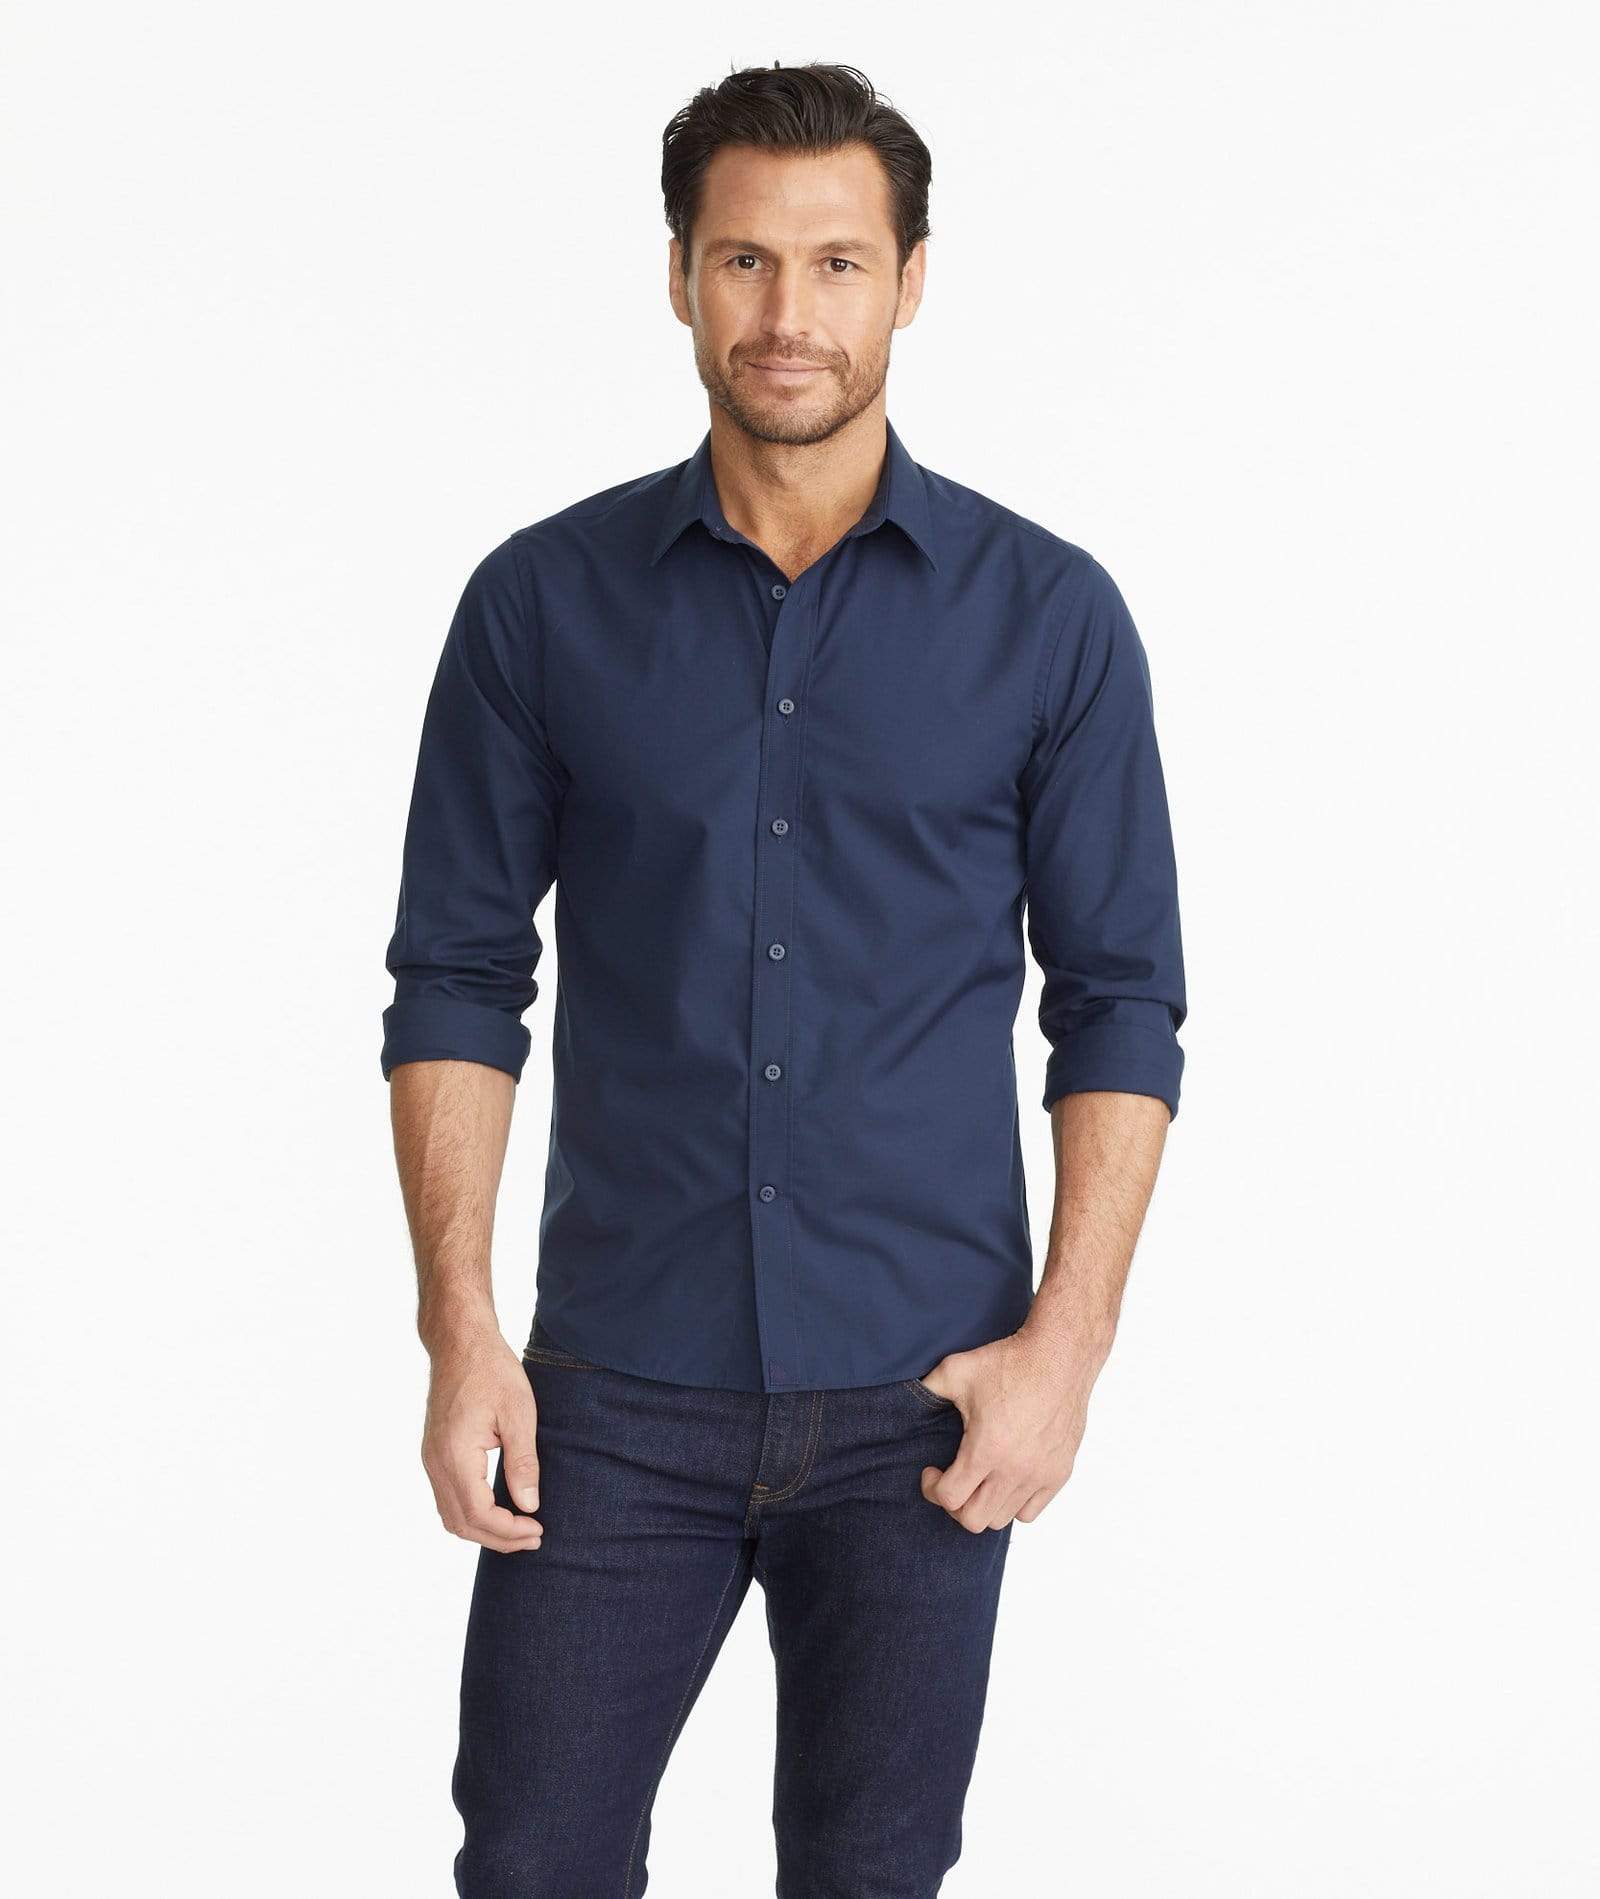 Ex Officio Mens XL Top Shirt Blue Collar Snap L/S Woven Cotton Pockets 17488